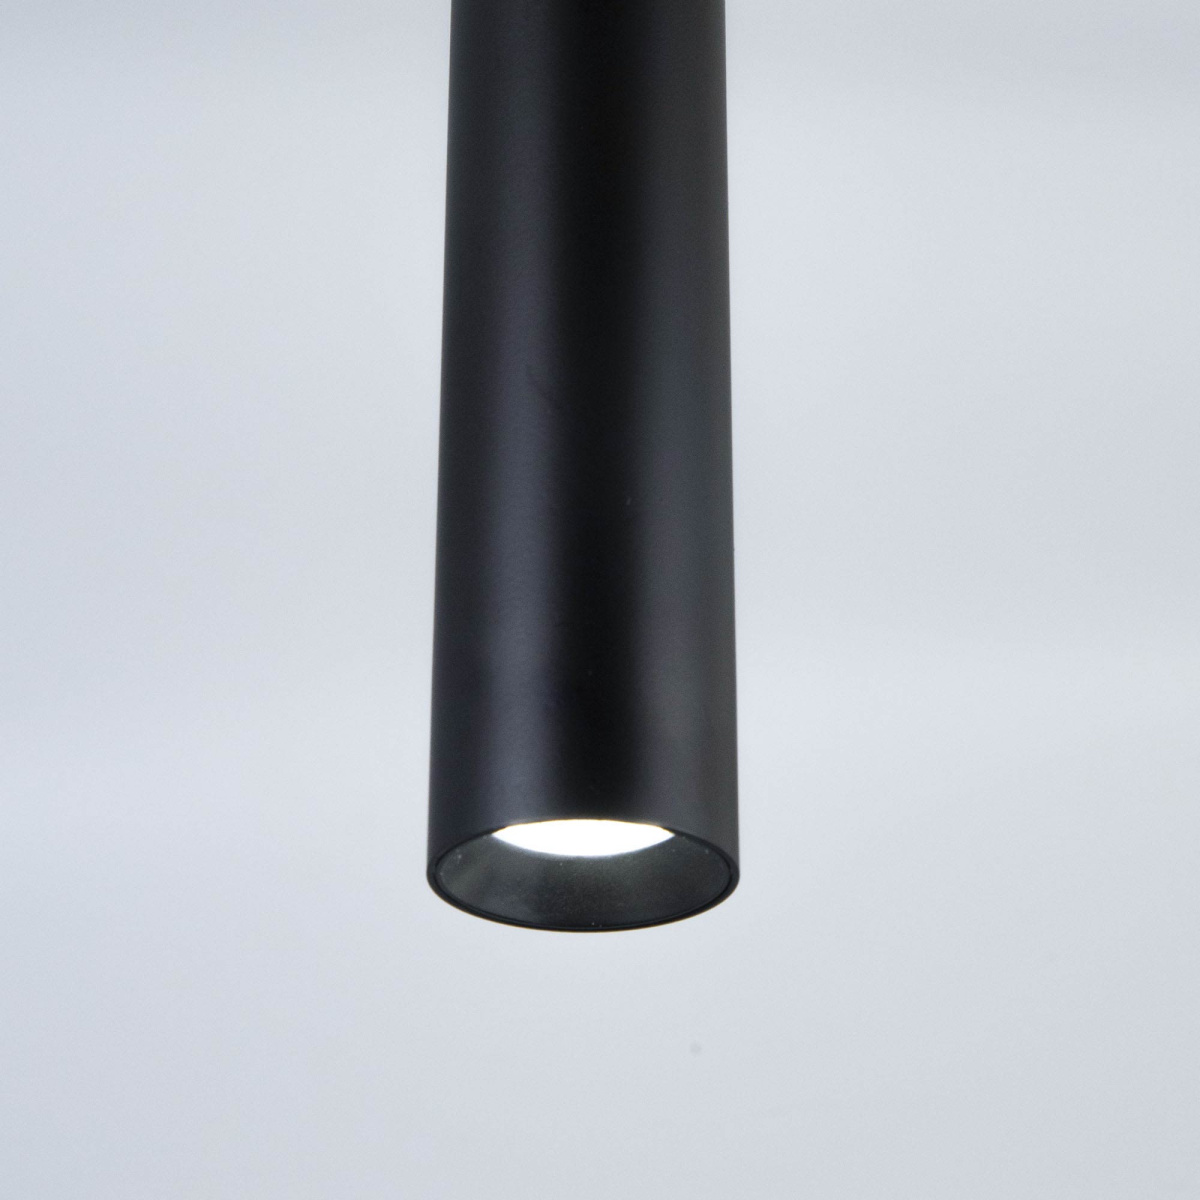 подвесной светильник citilux тубус (tubus), артикул CL01PB121N